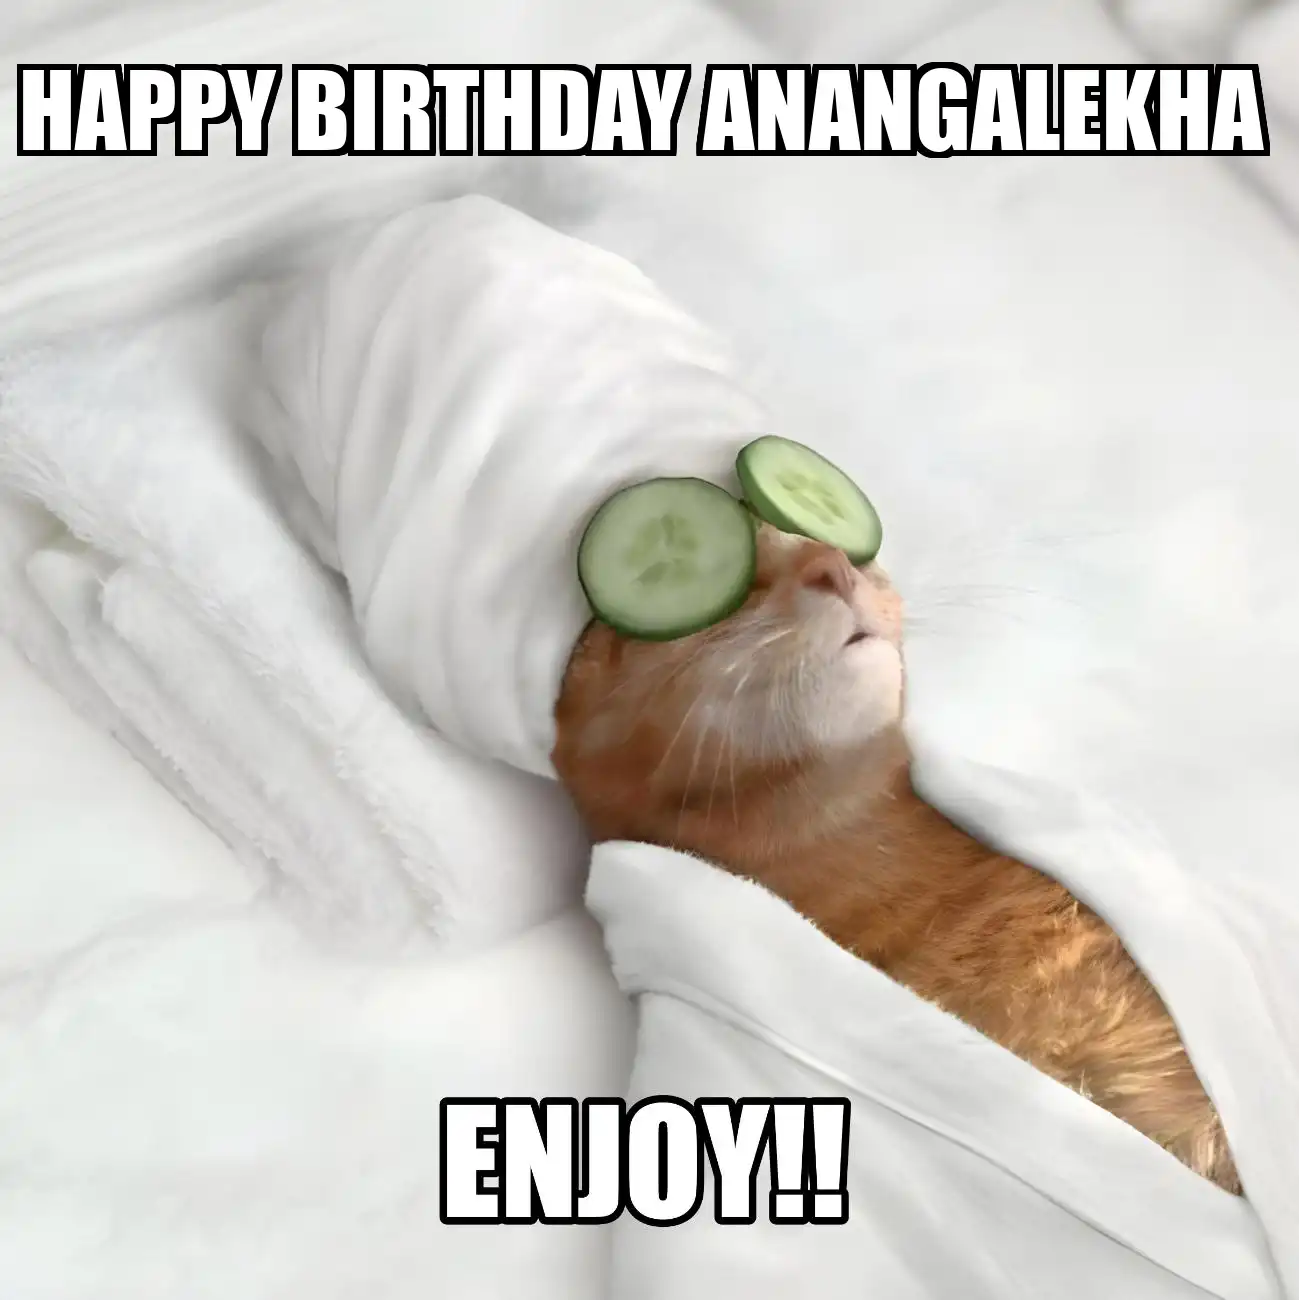 Happy Birthday Anangalekha Enjoy Cat Meme